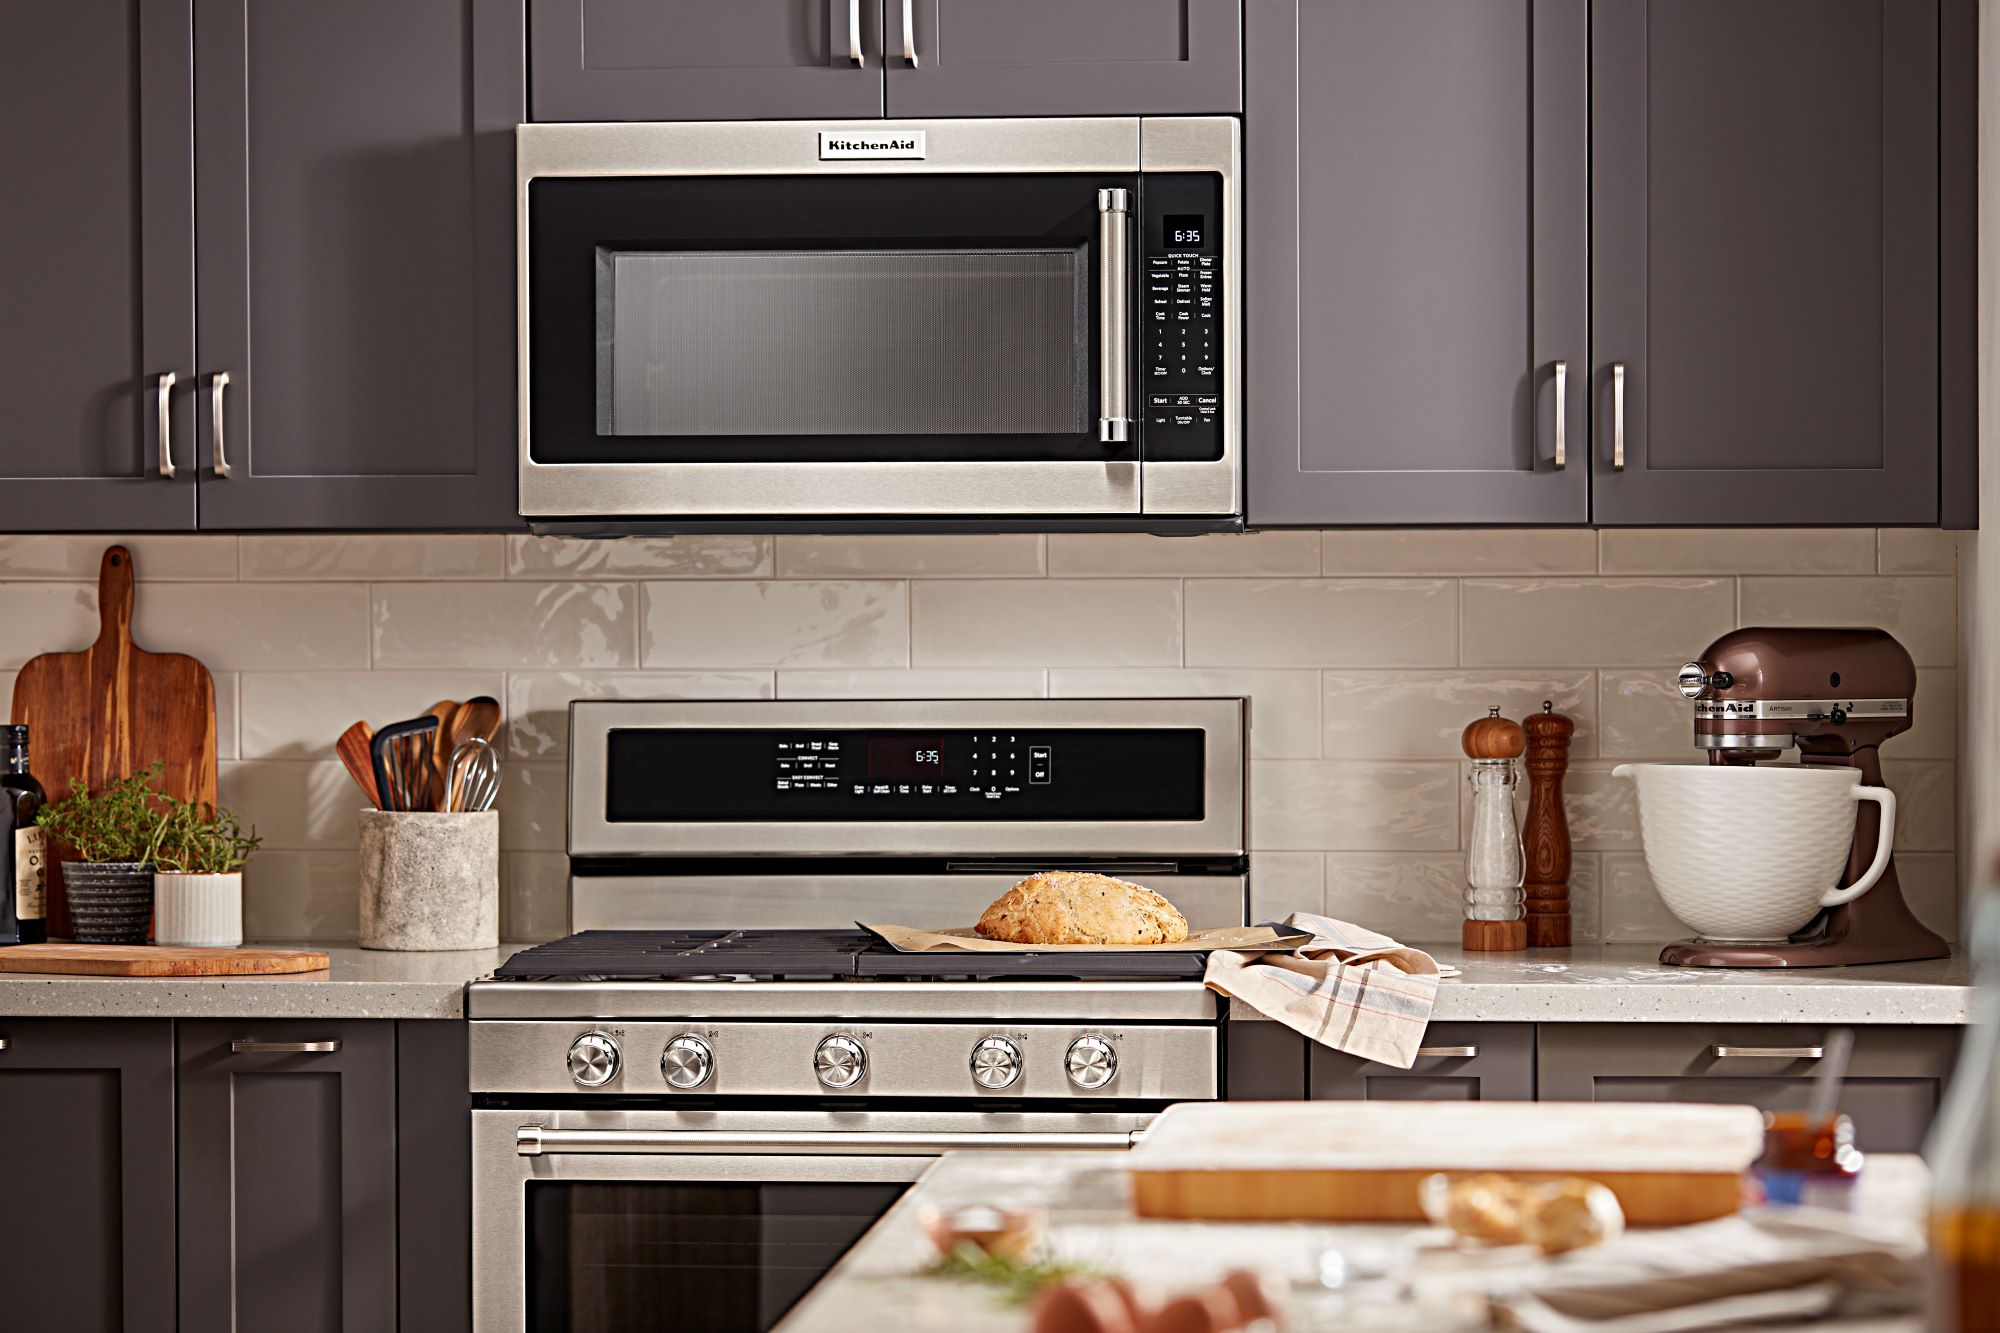 KitchenAid 1000-Watt Low Profile Microwave Hood Combination (Stainless Steel)